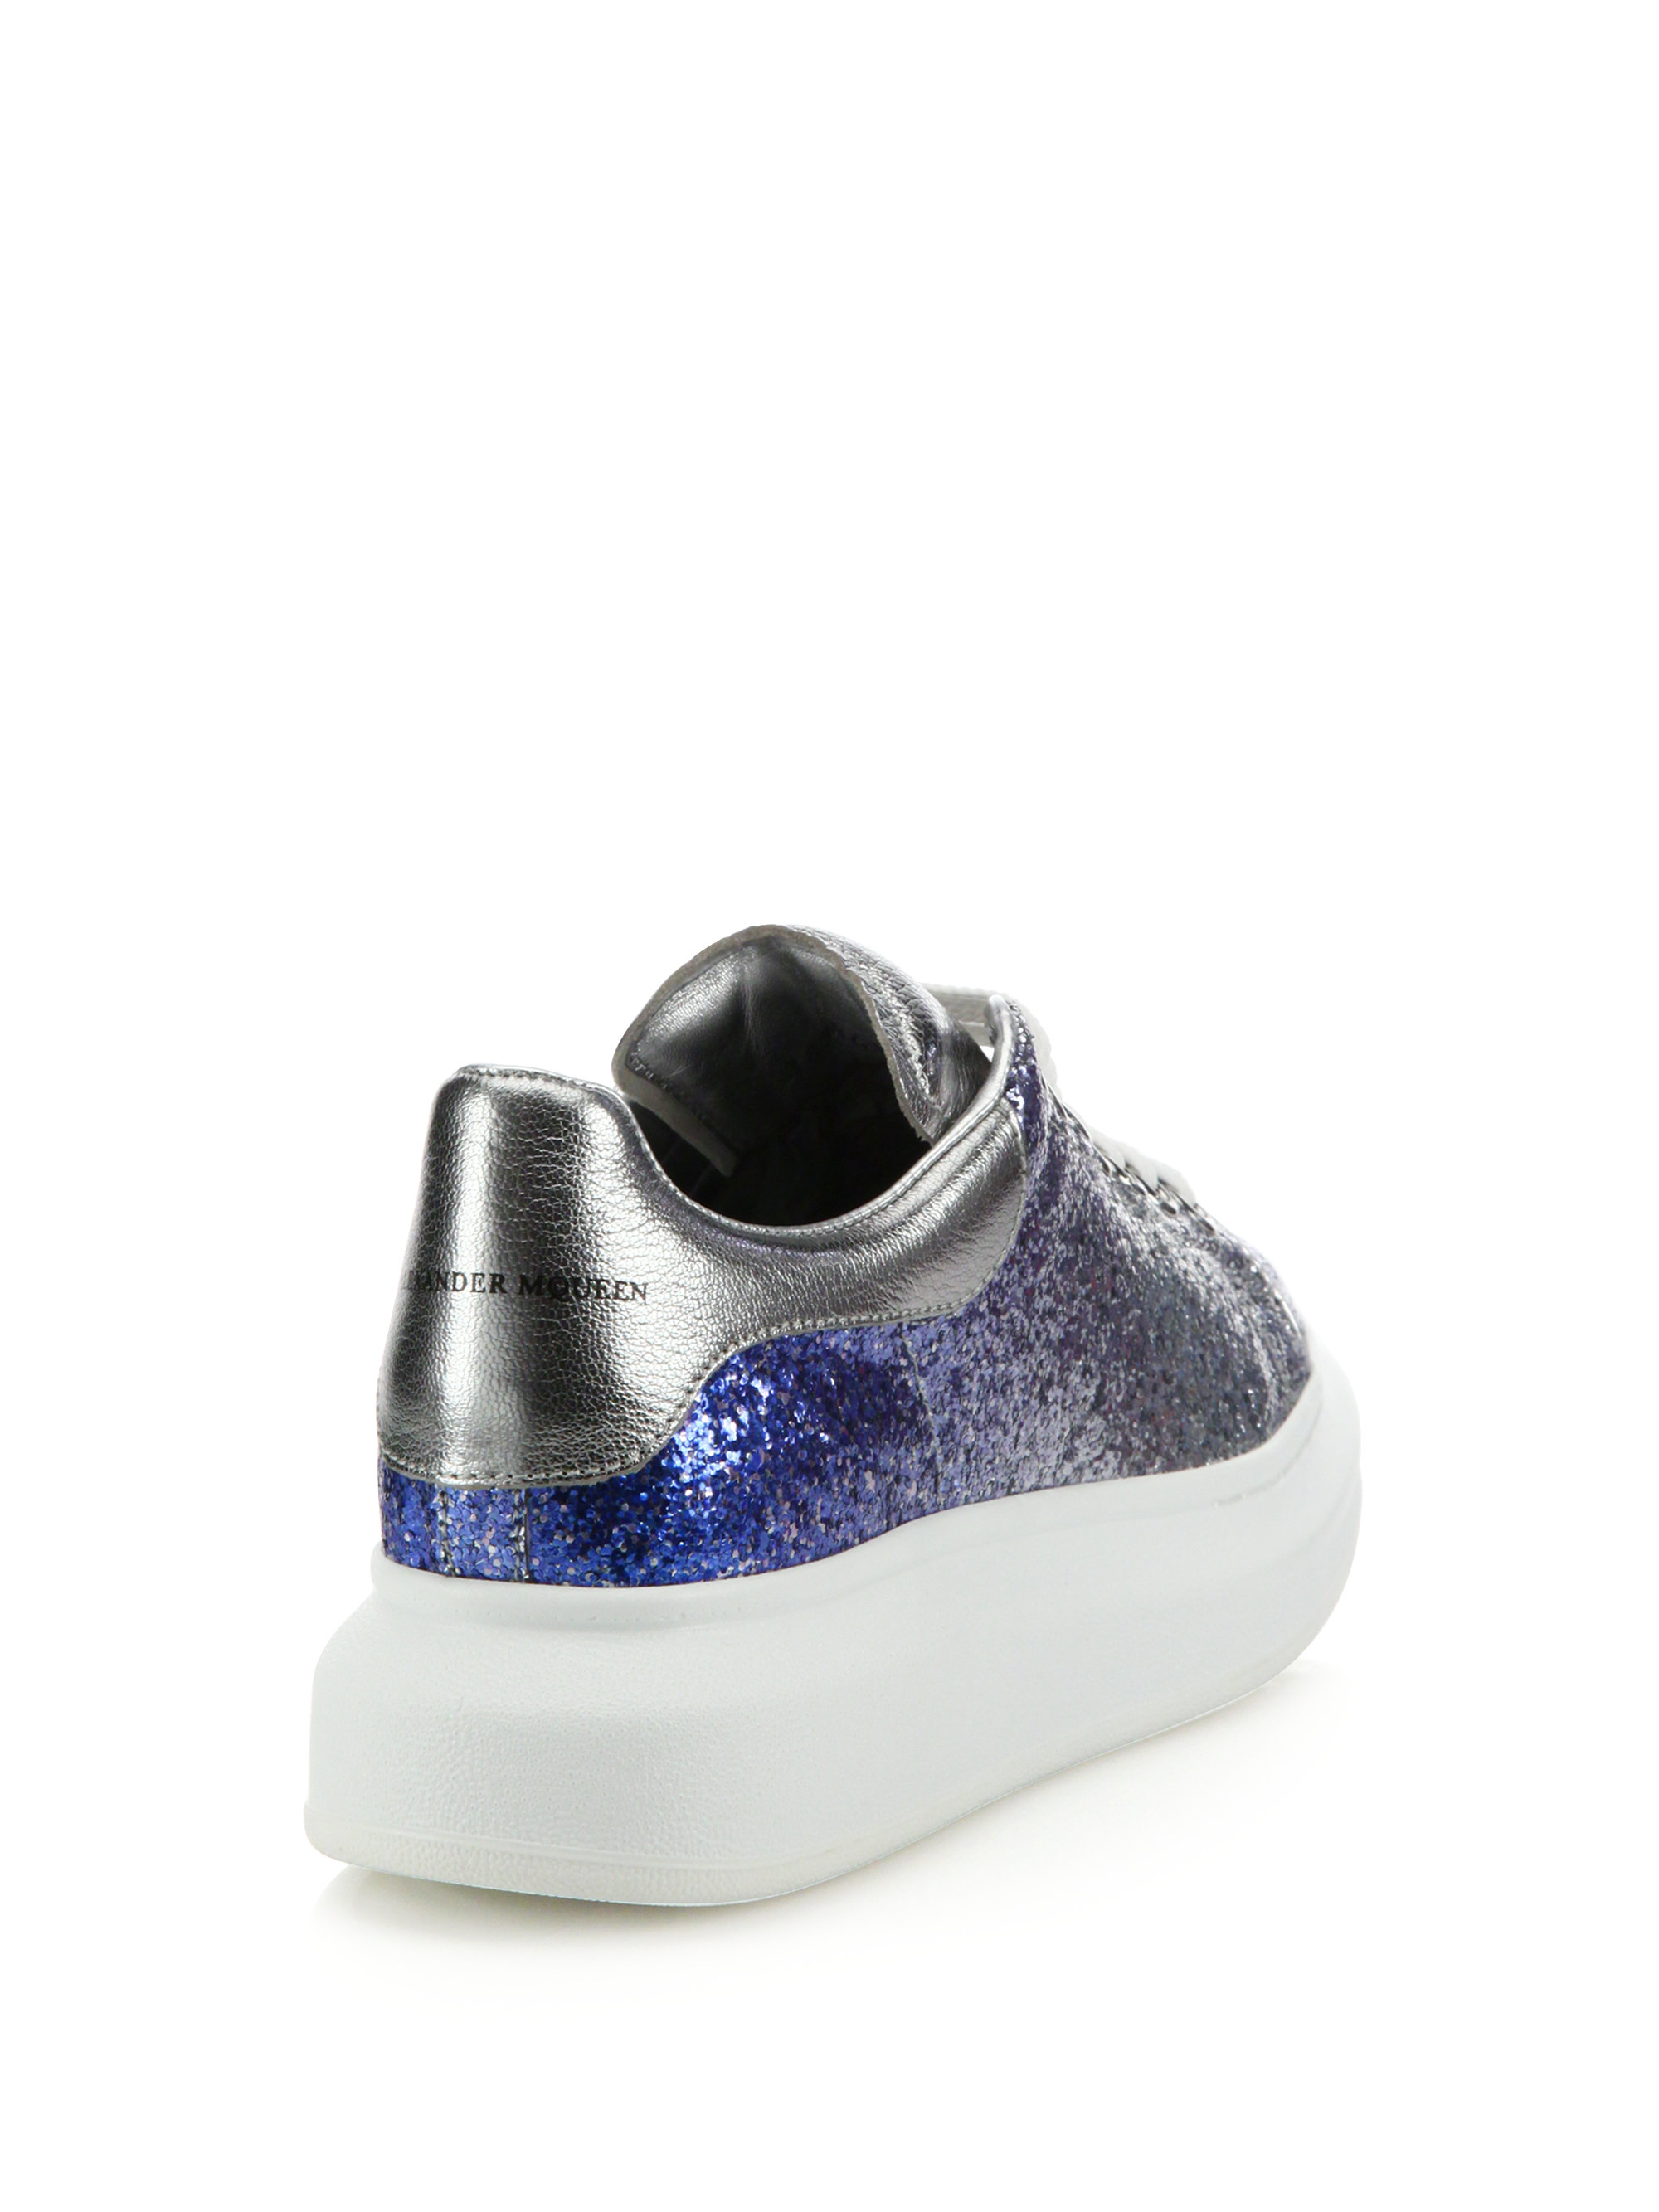 Alexander McQueen Glitter & Metallic Leather Platform Sneakers in Blue |  Lyst